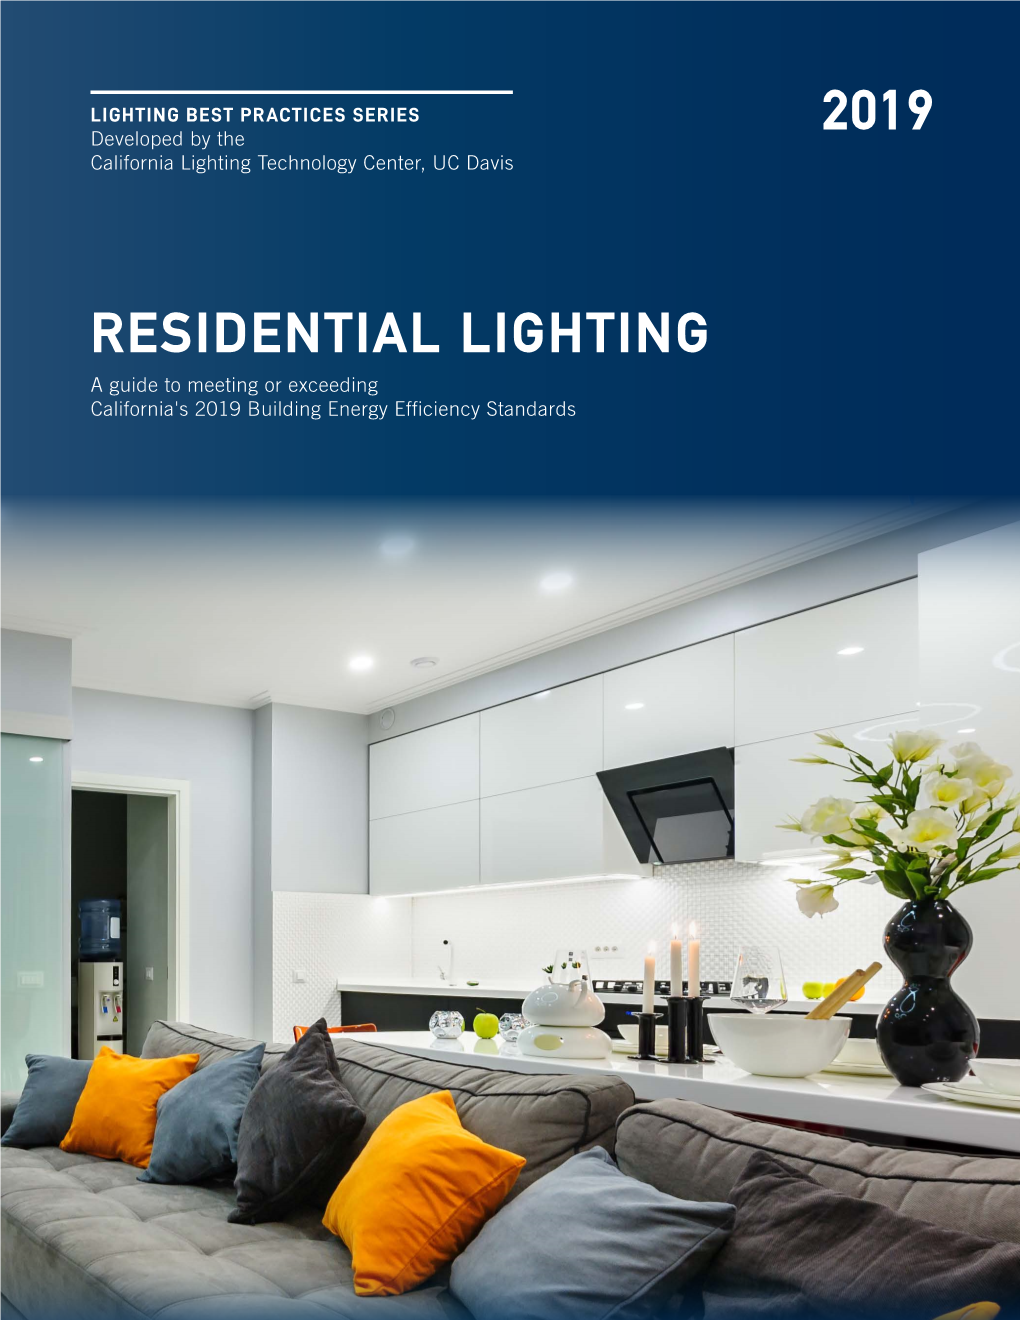 Residential Lighting Guide for 2019 Building Energy Efficiency Standards